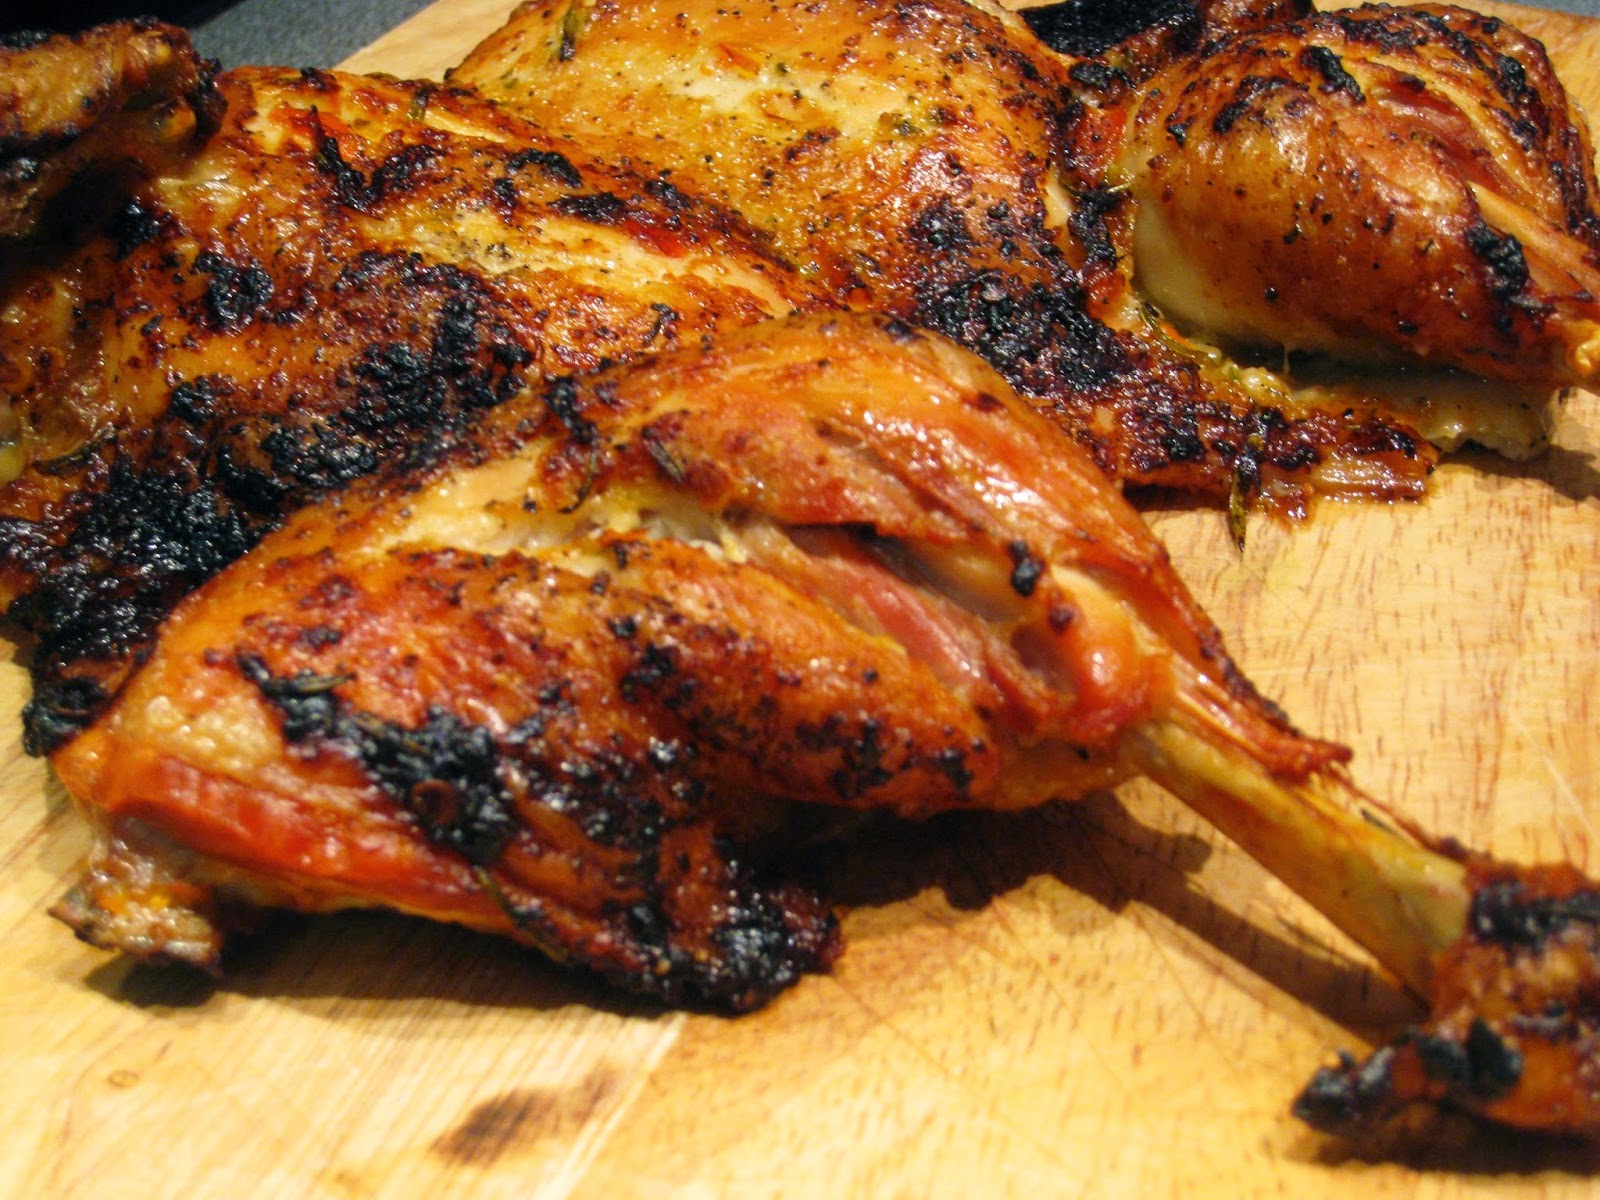  Resep  Cara Membuat Ayam  Panggang  Pedas  Enak  Resep  